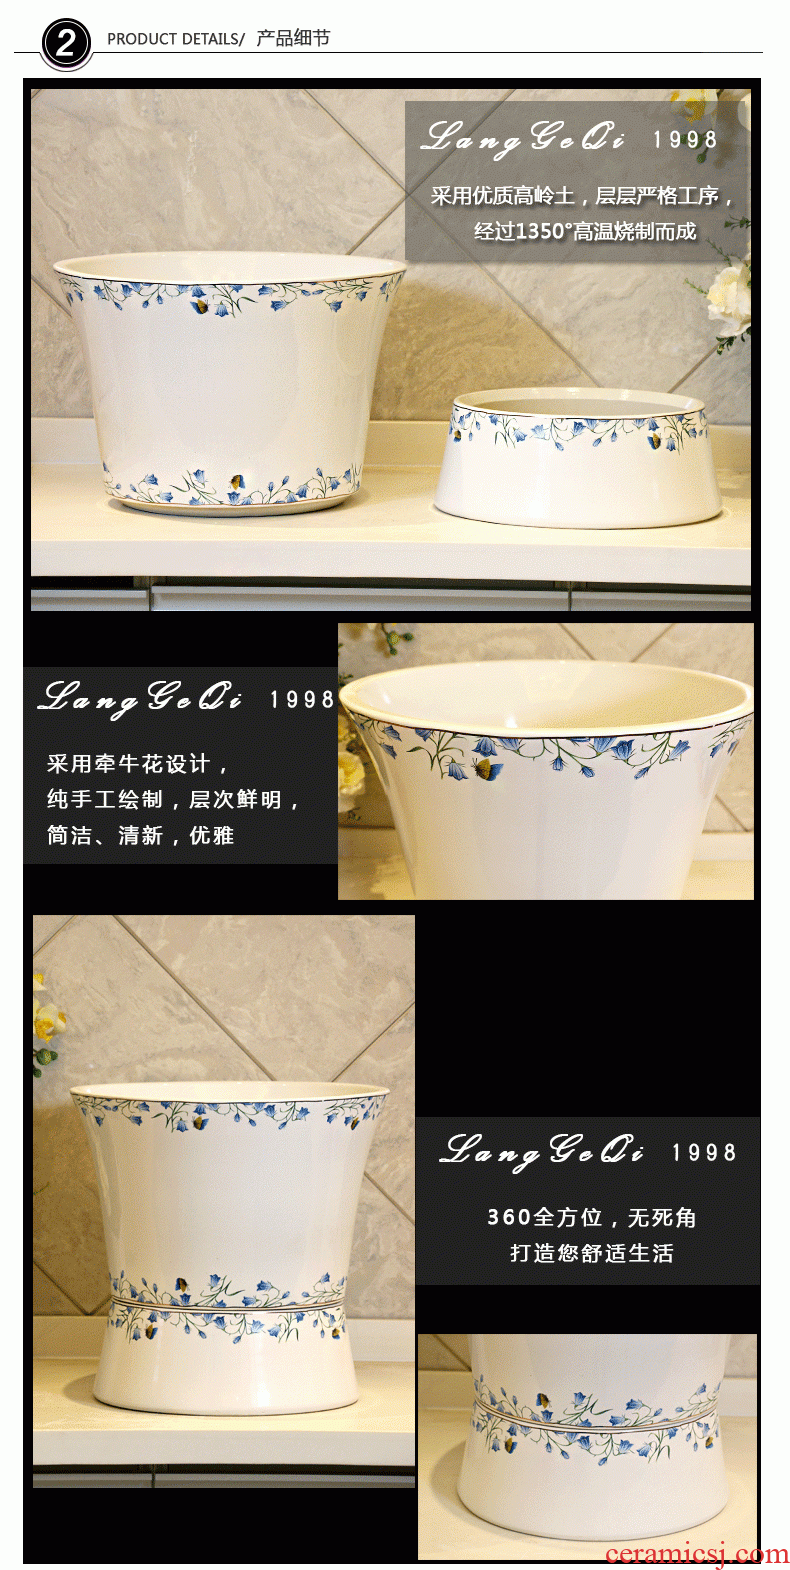 The package mail basin of jingdezhen ceramic art mop mop pool mop pool jasmine quietly elegant